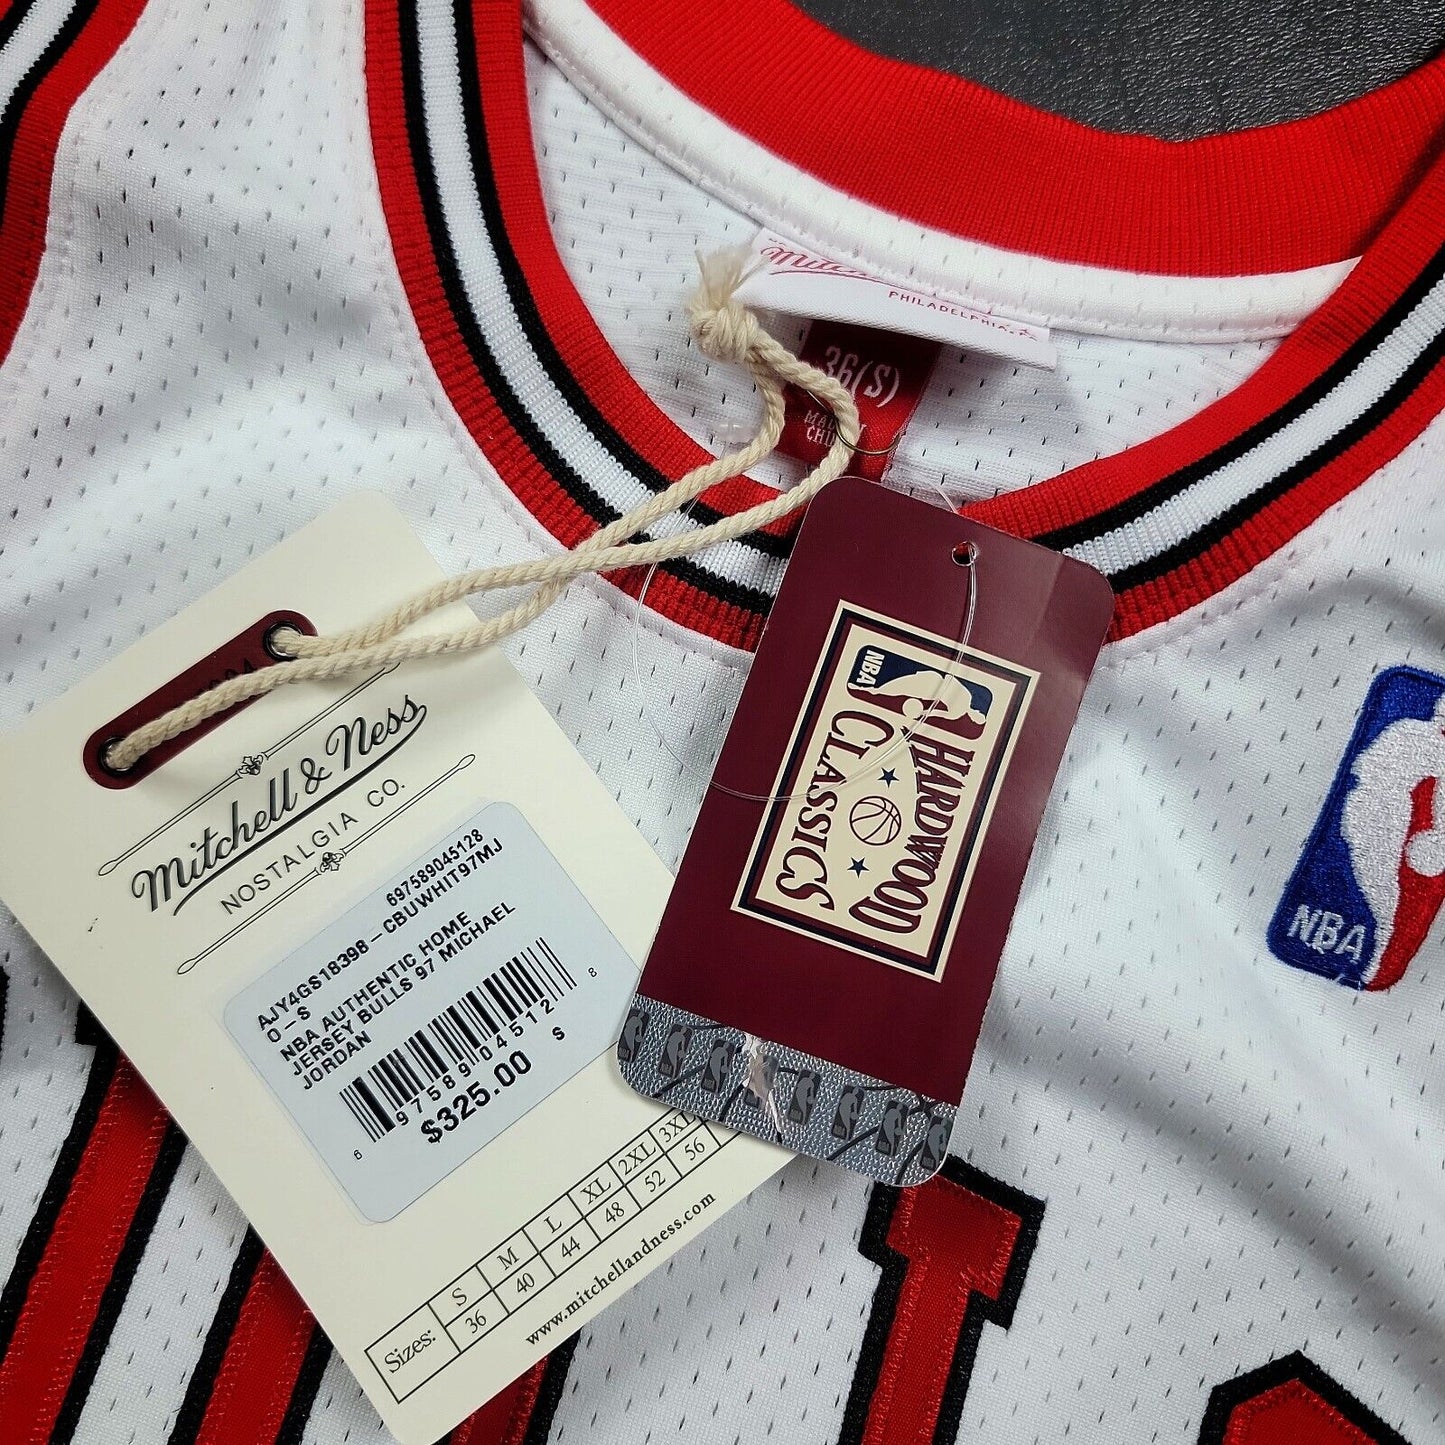 100% Authentic Michael Jordan Mitchell Ness 97 98 Bulls Jersey Size 36 S Mens